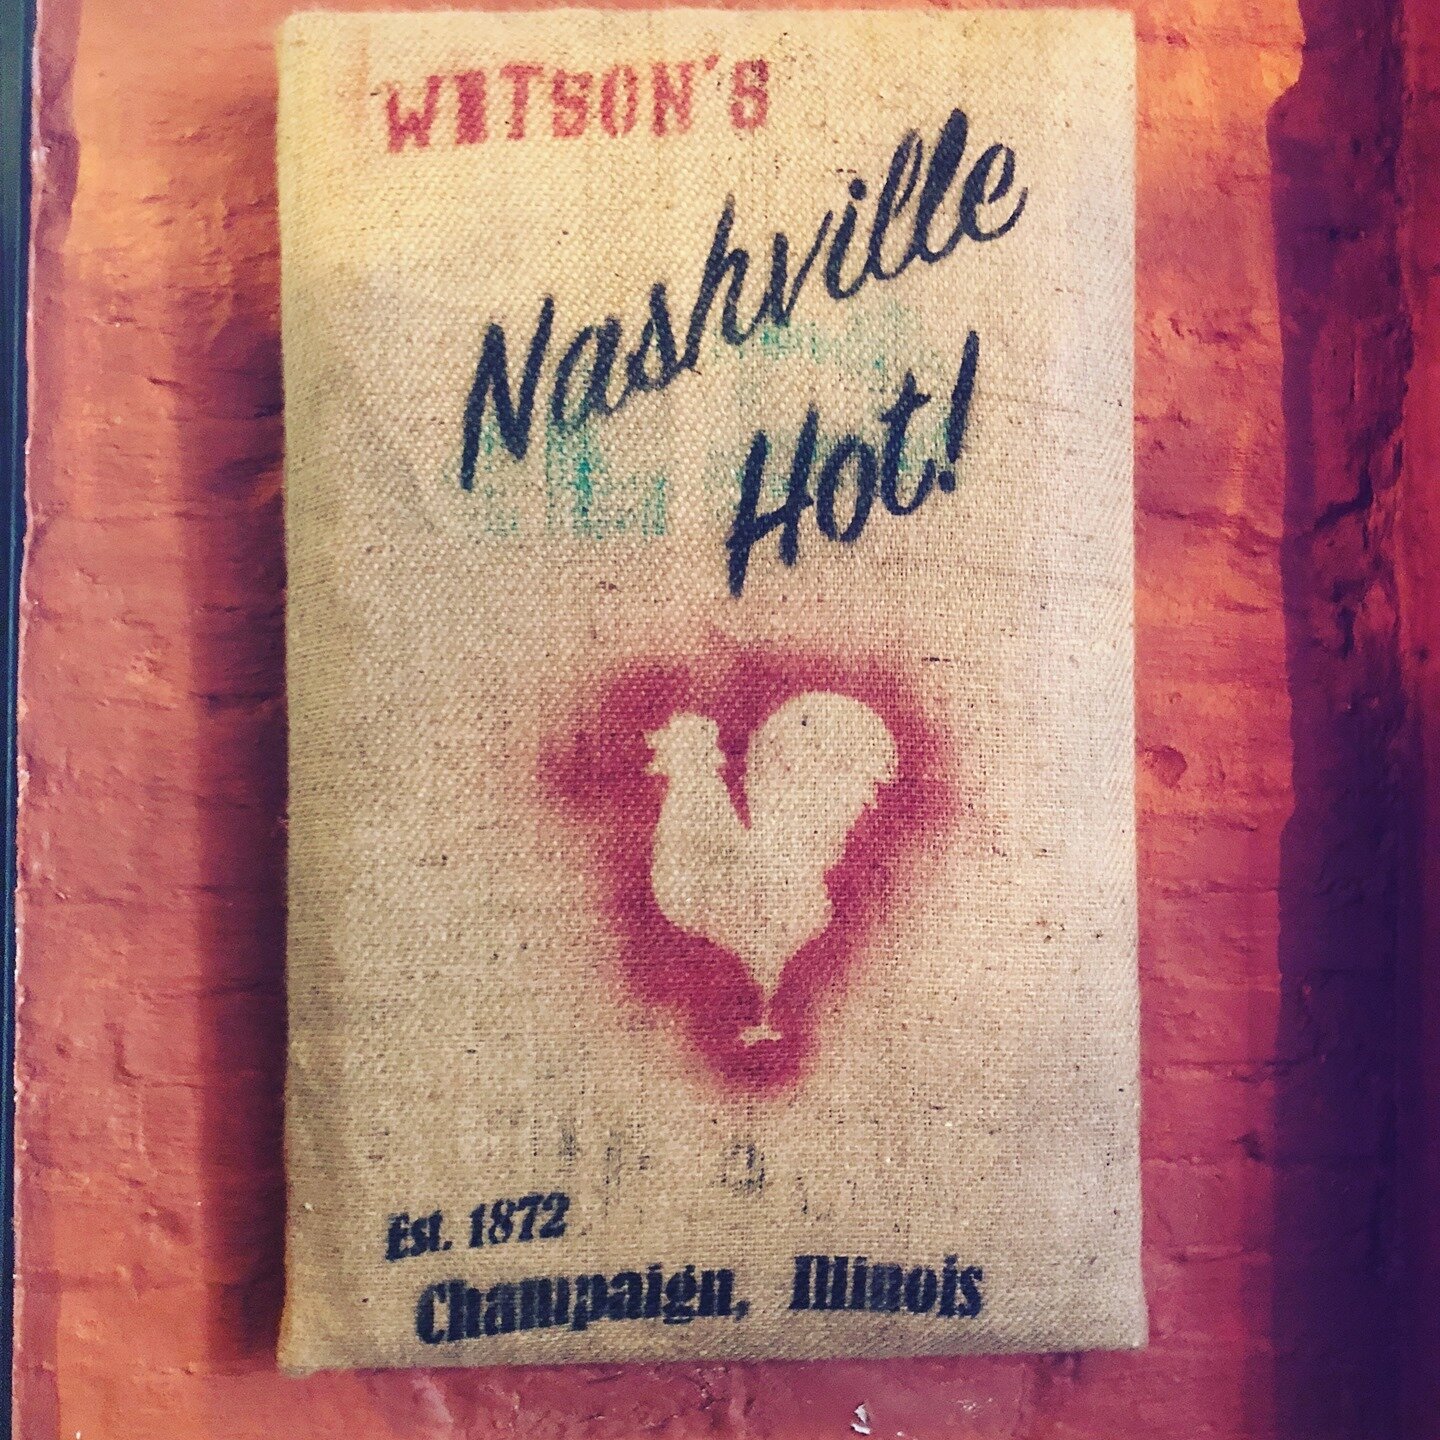 Get it Nashville Hot!